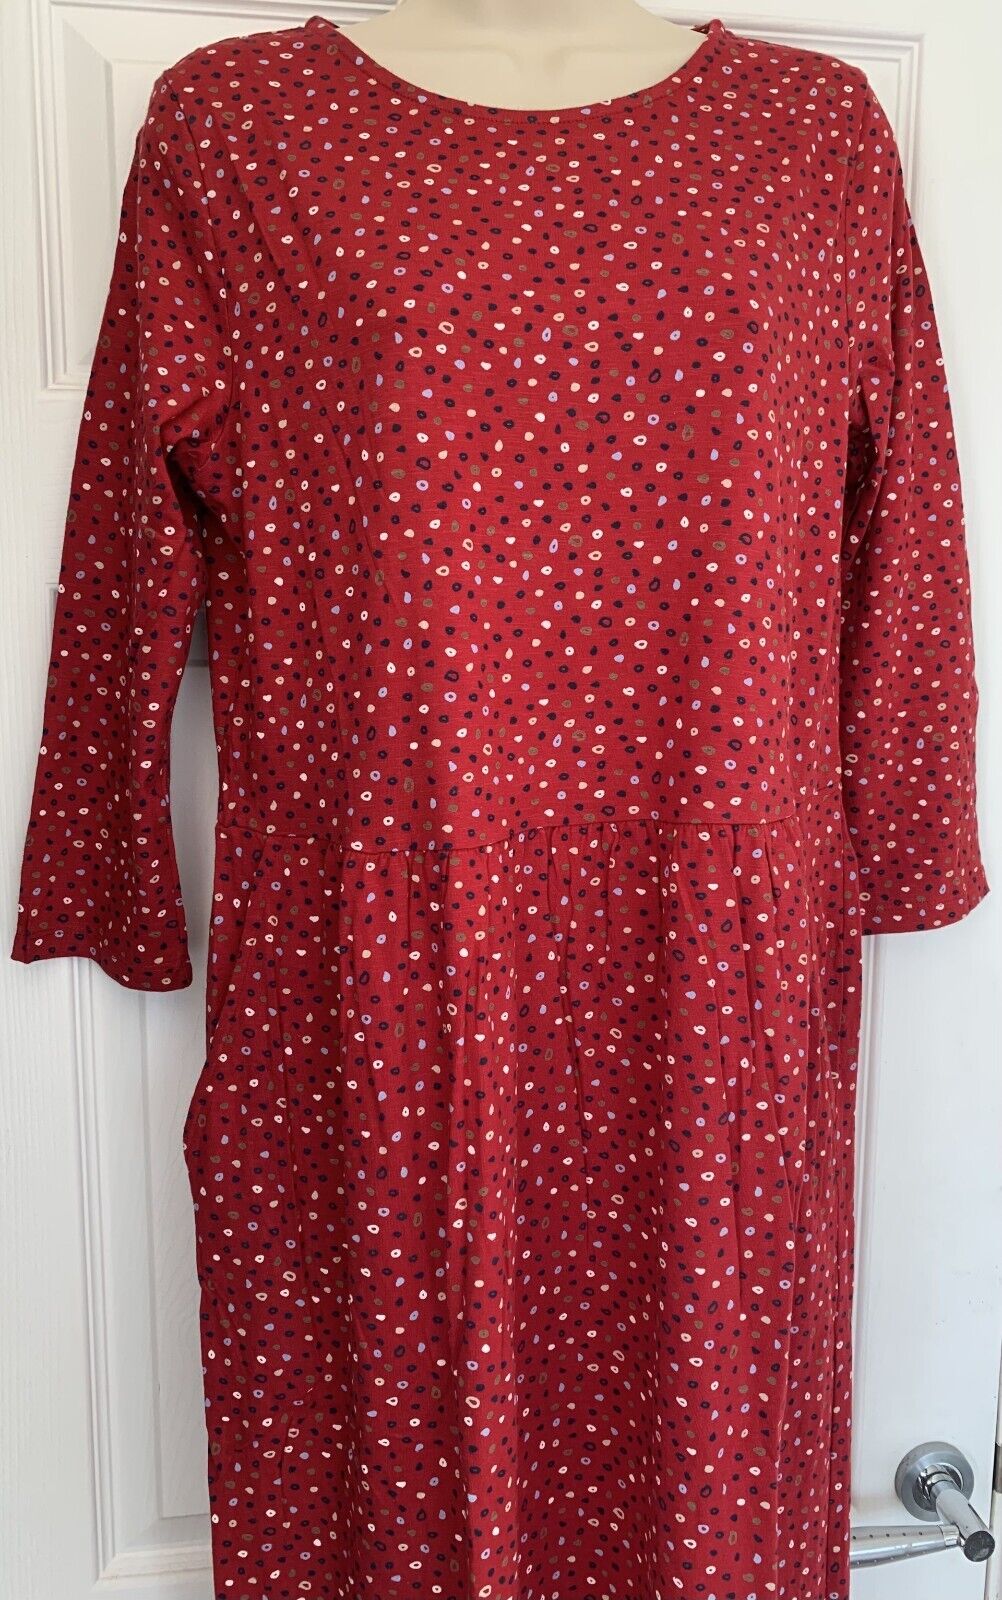 EX Seasalt Red Dotty Guelder Rose Dress Sizes 8 10 12 14 16 18 22 26/28 RRP £70